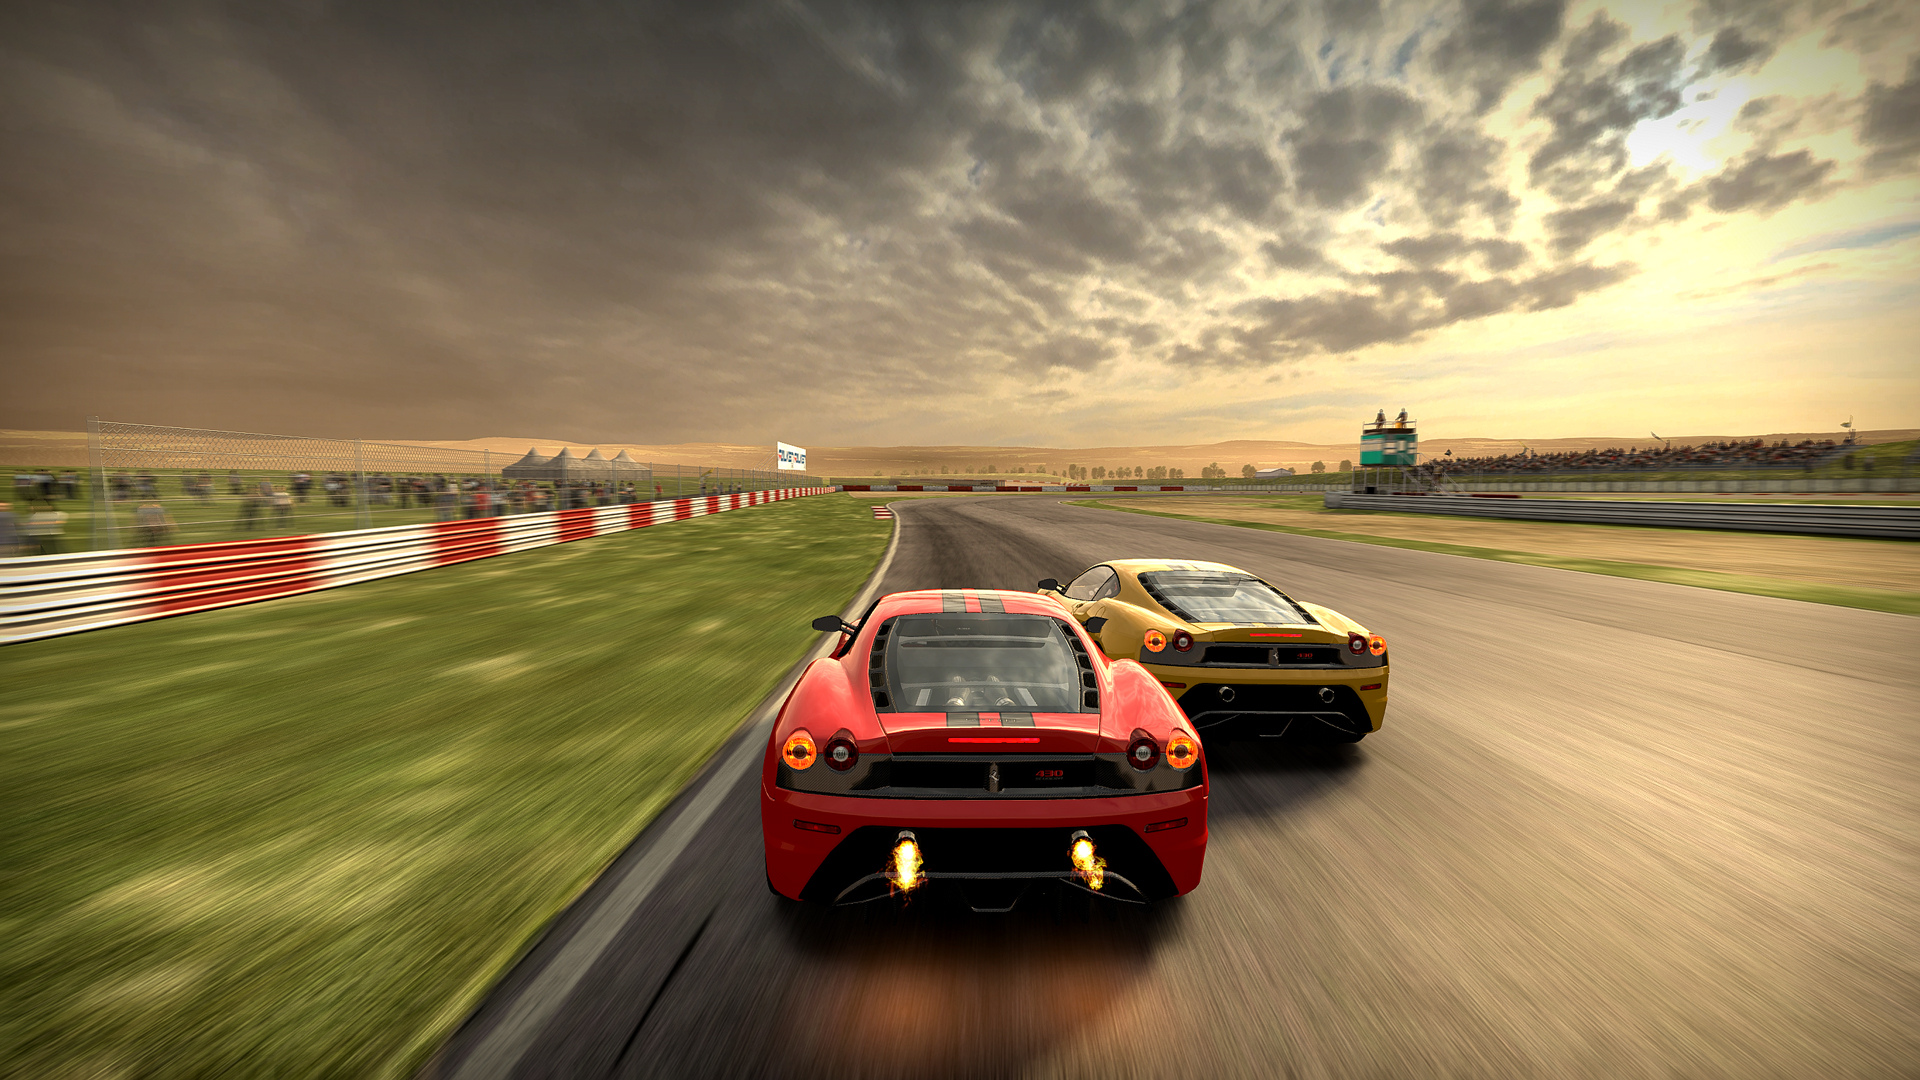 Free-Racing-Games-Online